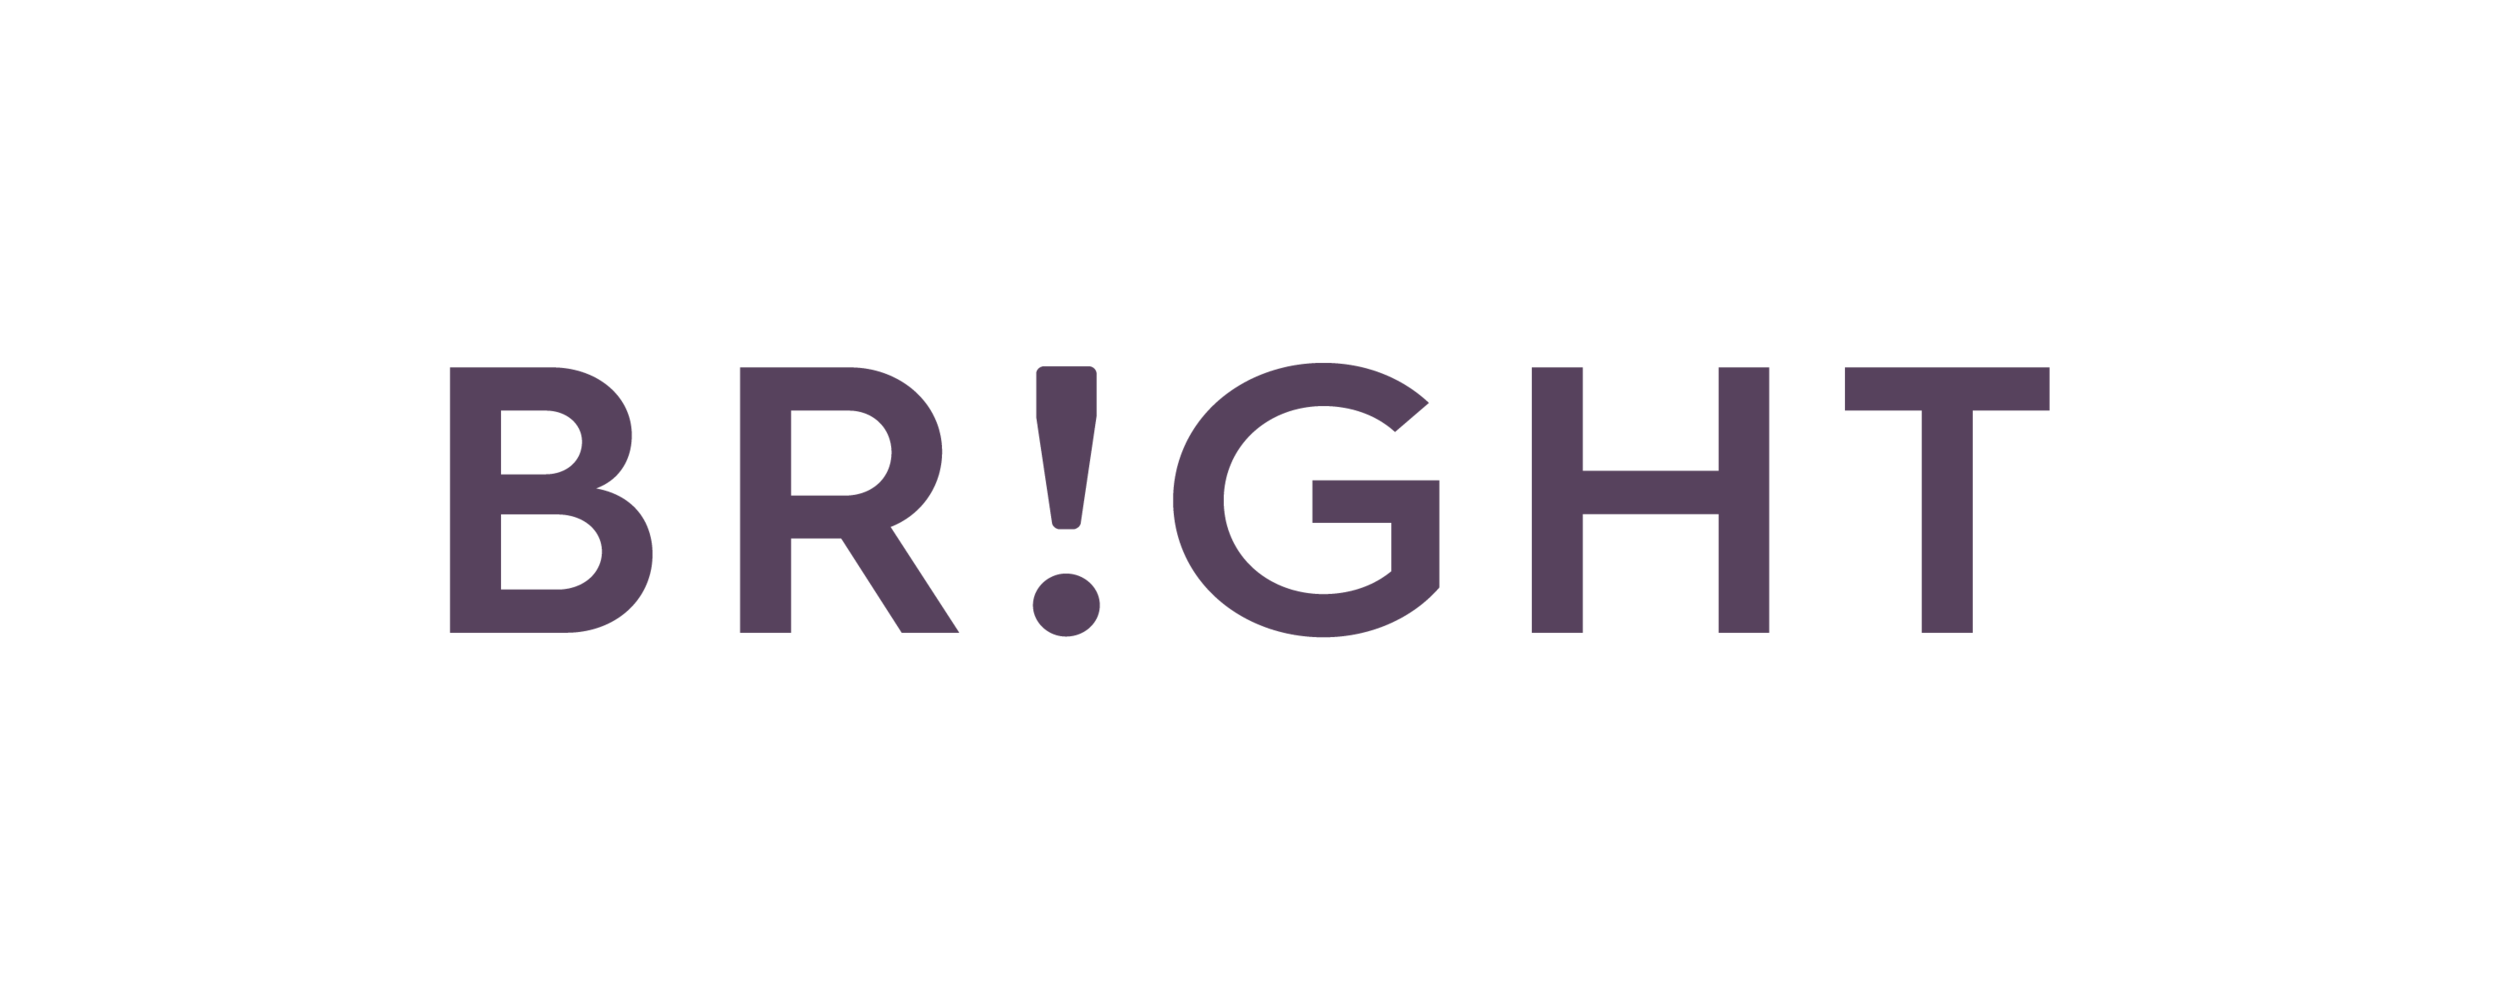 Bright logo.png